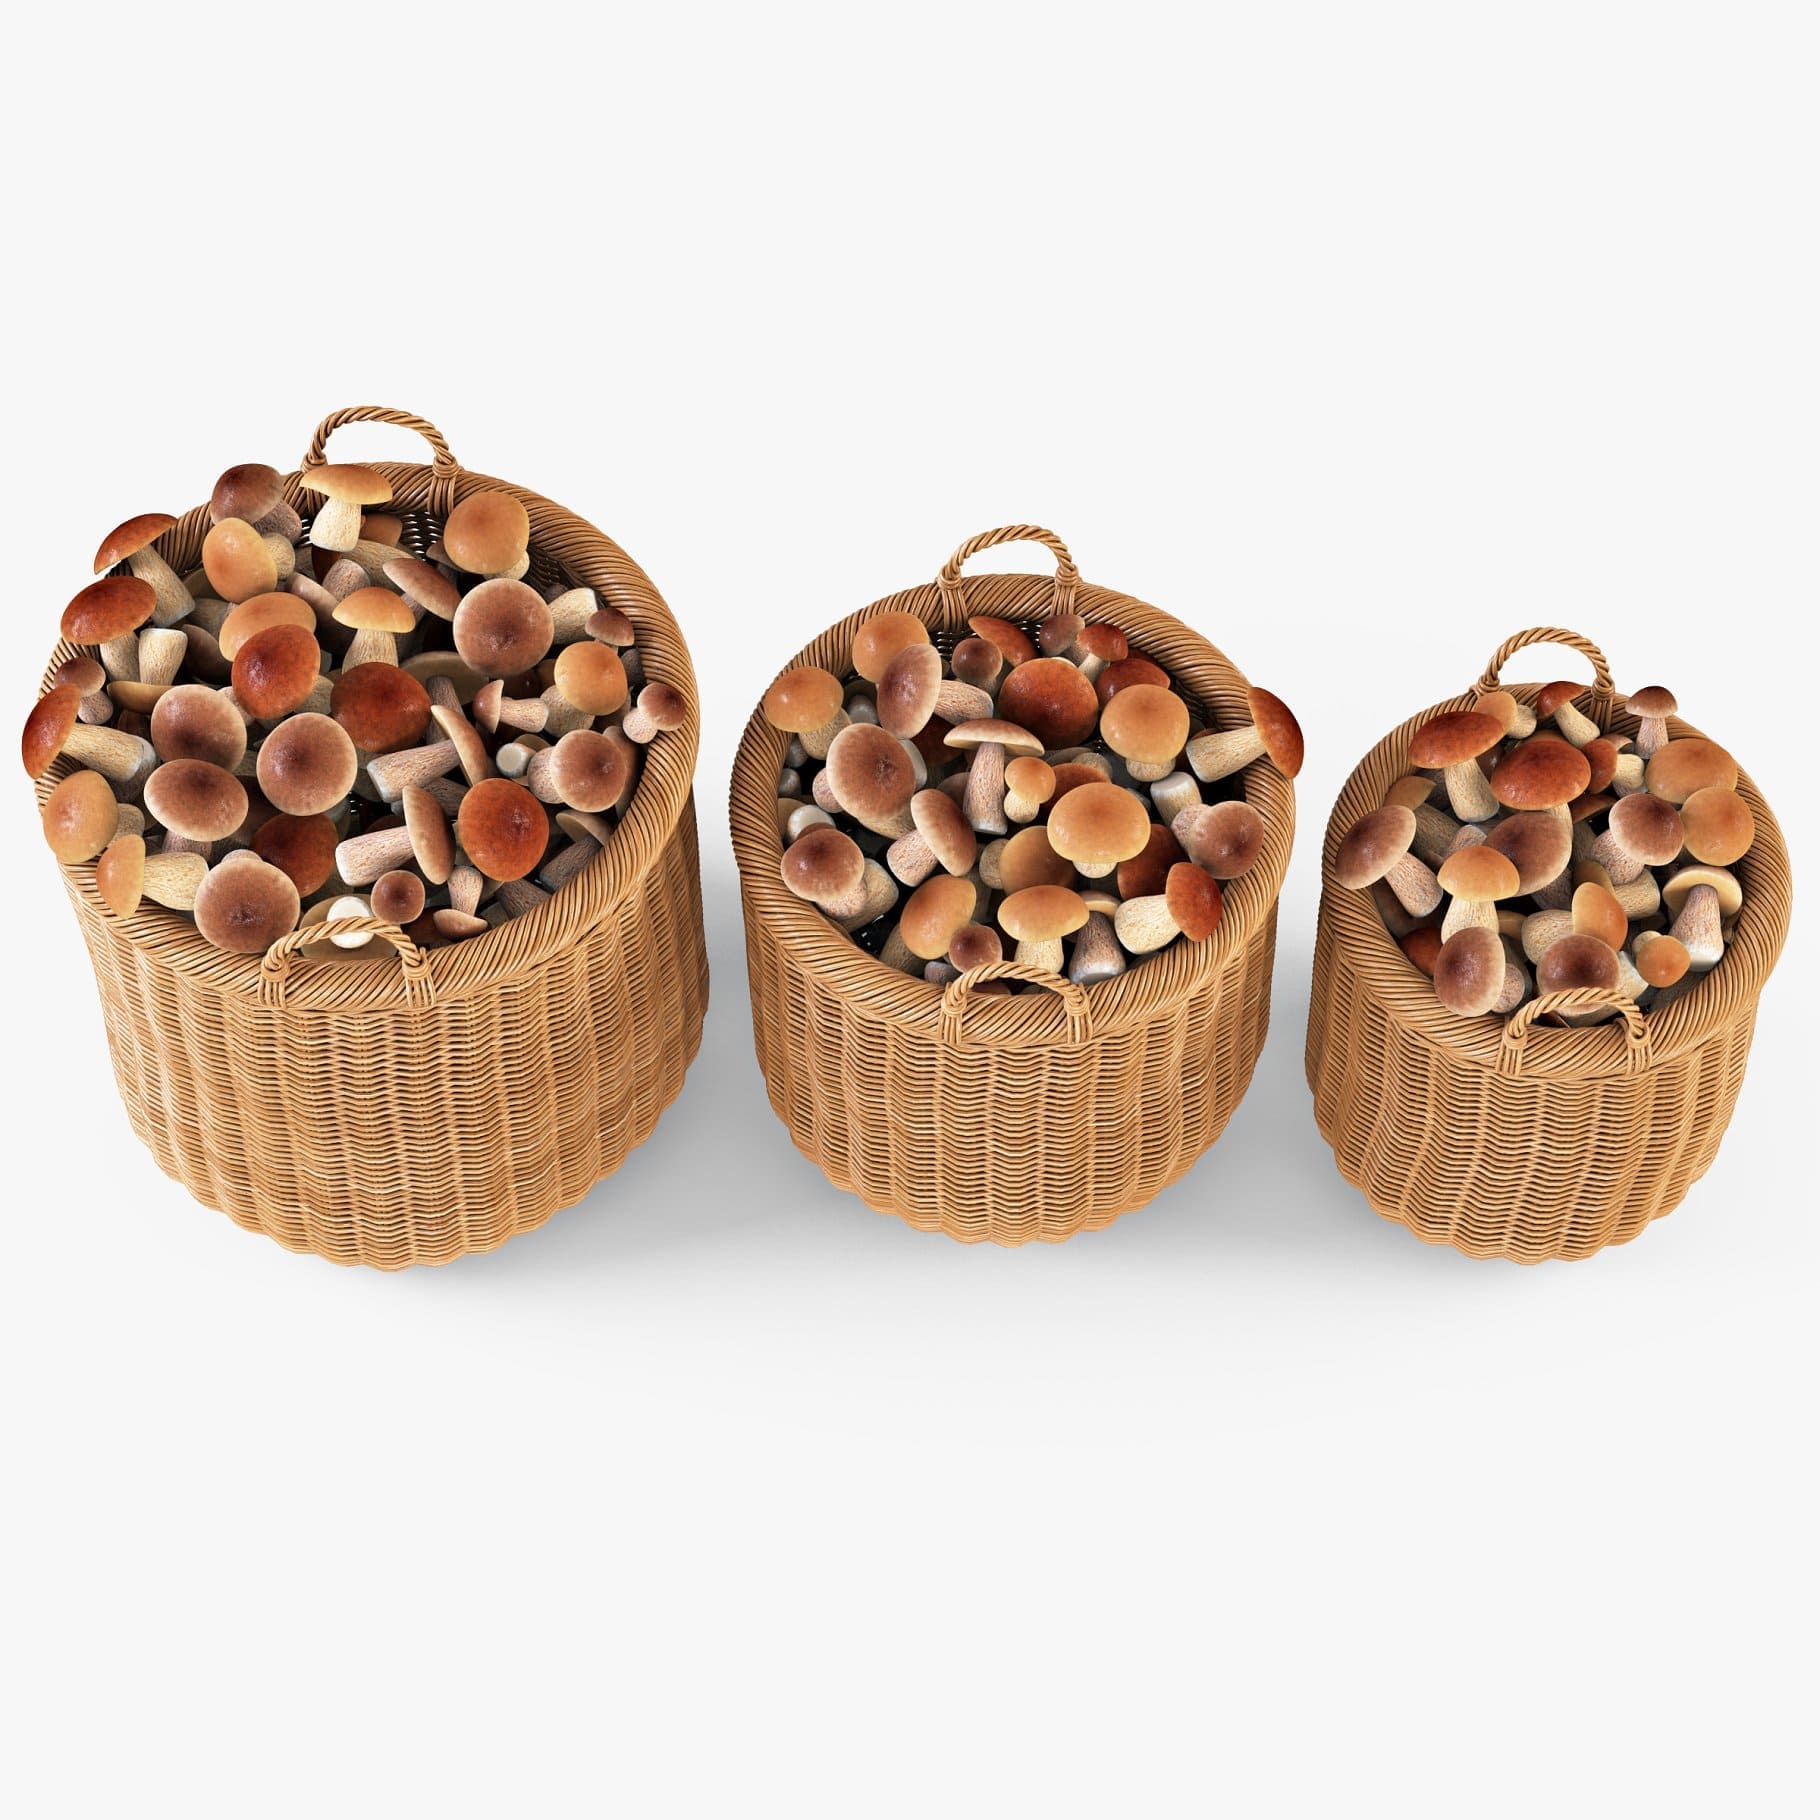 Three wicker baskets with mushrooms.